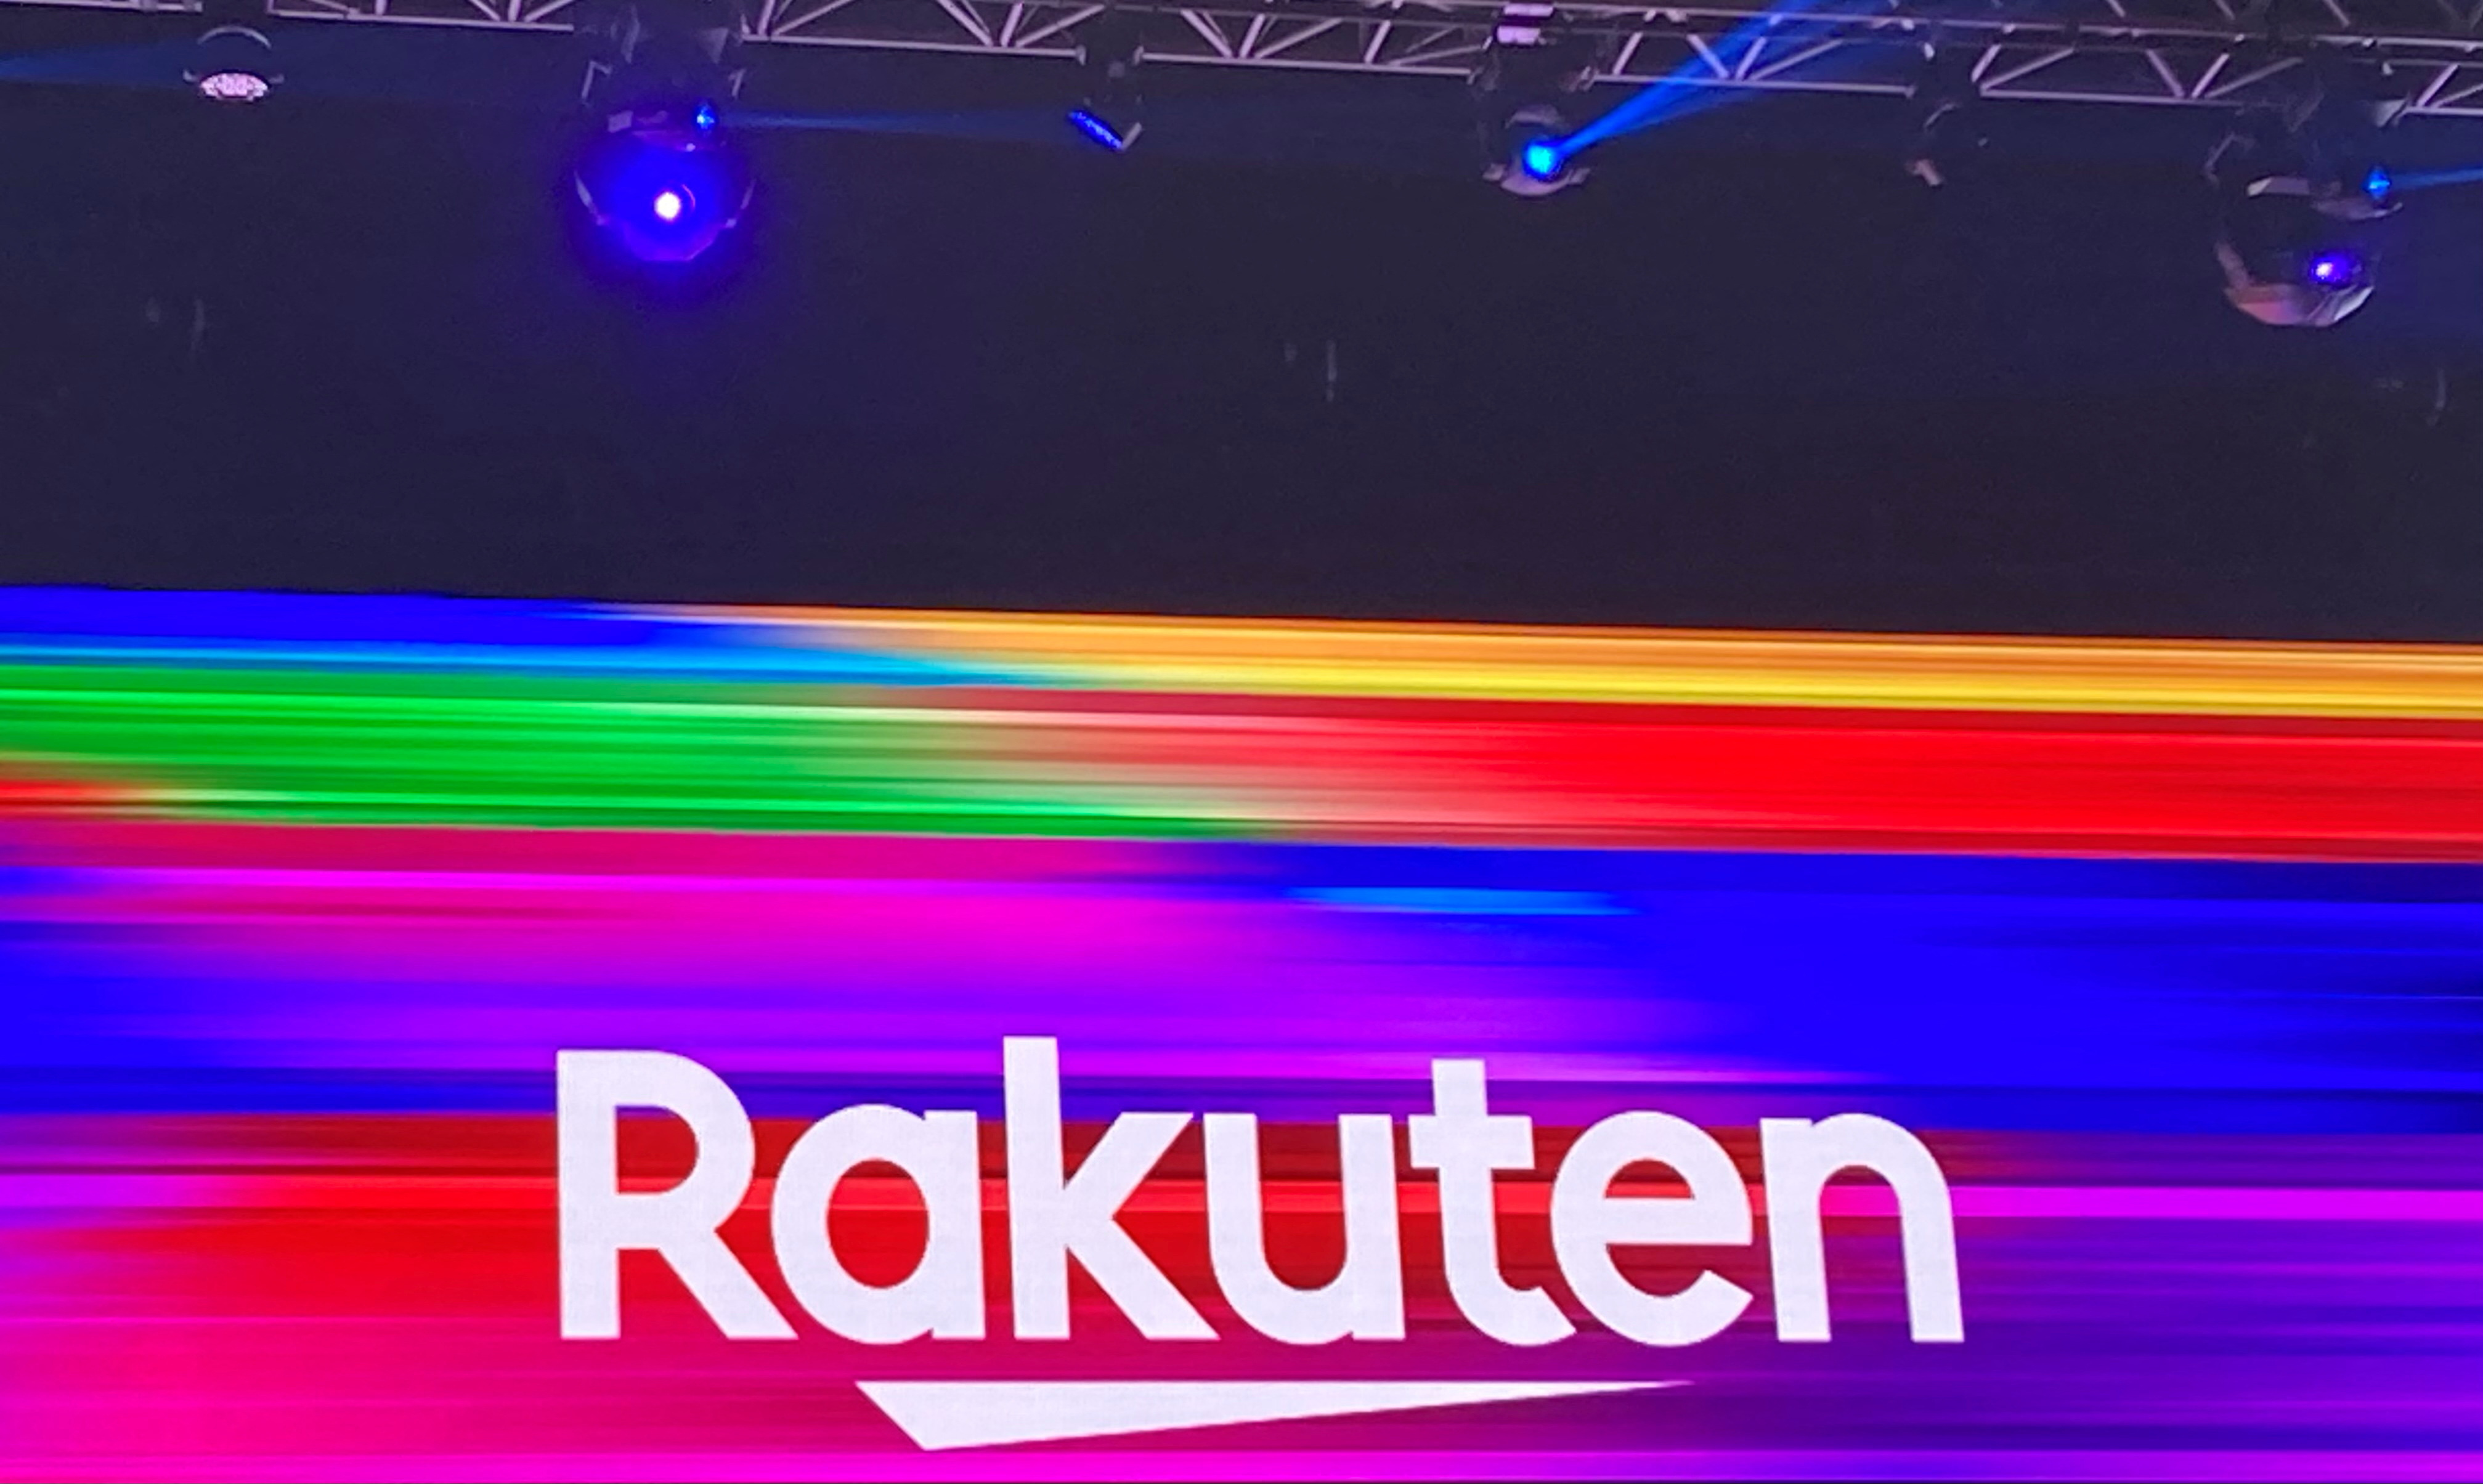 The logo of Rakuten is pictured in Yokohama